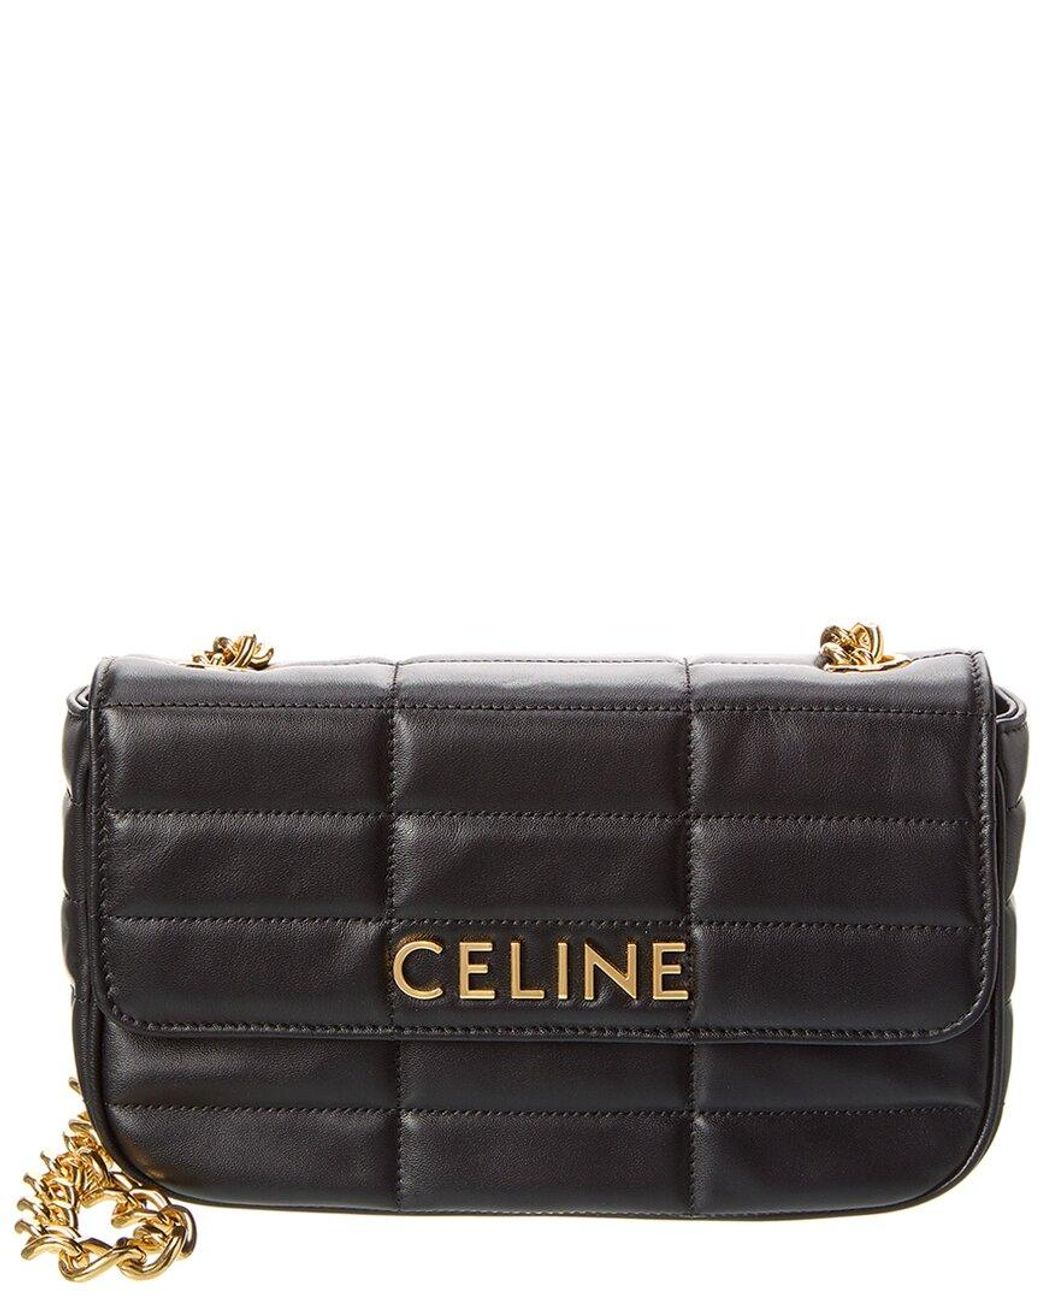 Celine - Chain Shoulder Bag Cuir Triomphe in Shiny Calfskin Black for Women - 24S